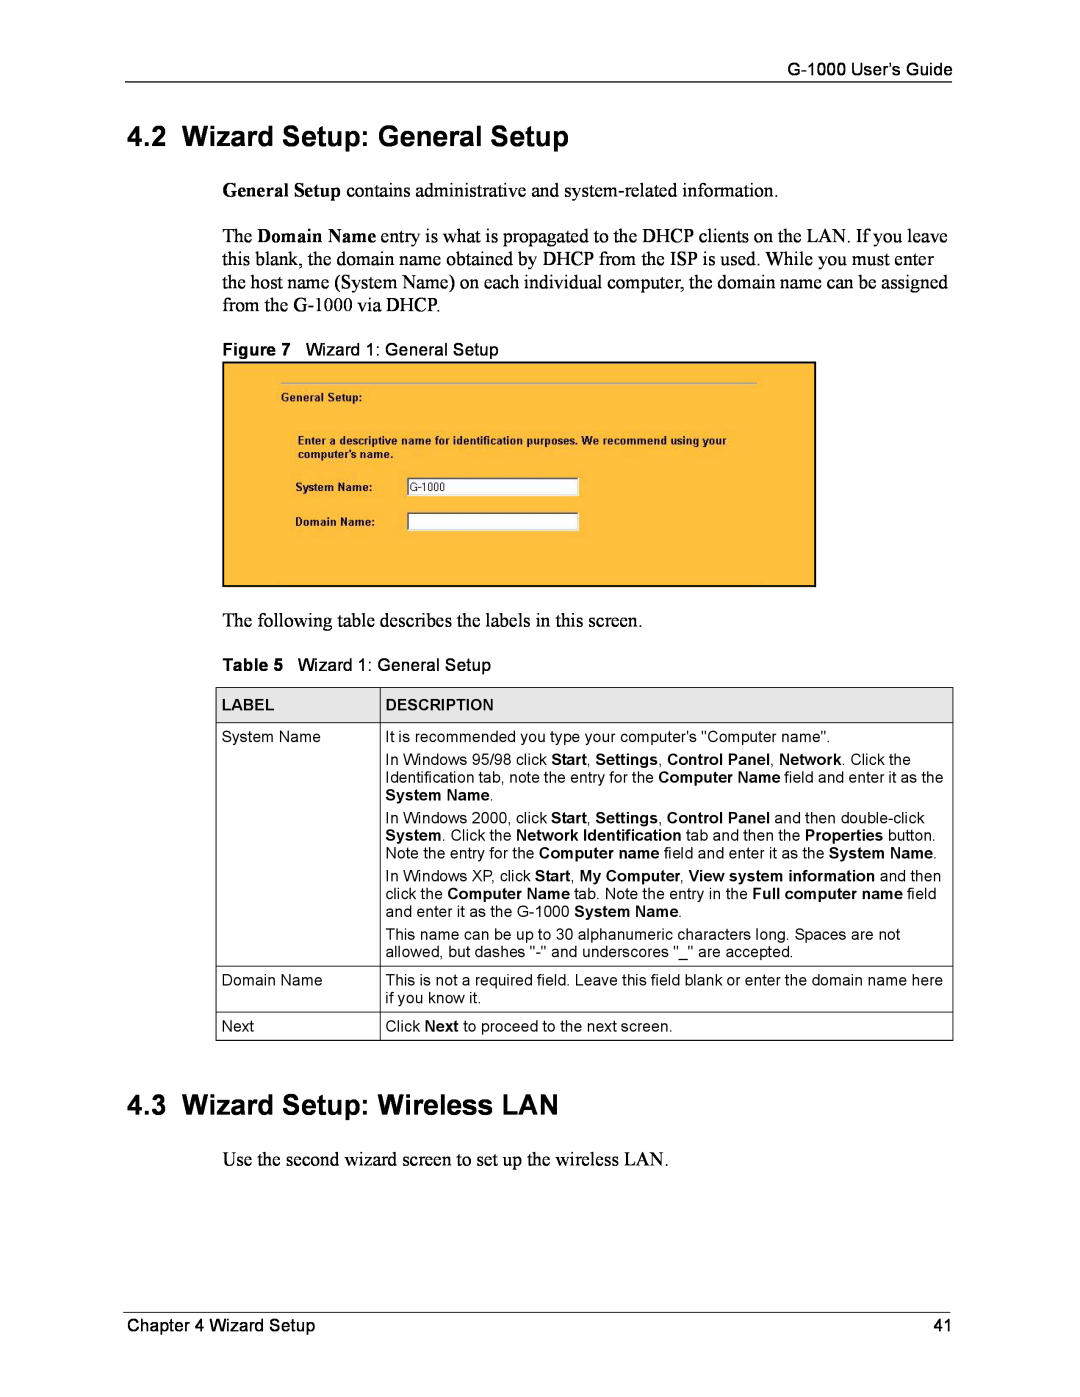 ZyXEL Communications Wizard Setup General Setup, Wizard Setup Wireless LAN, G-1000 User’s Guide, Wizard 1 General Setup 